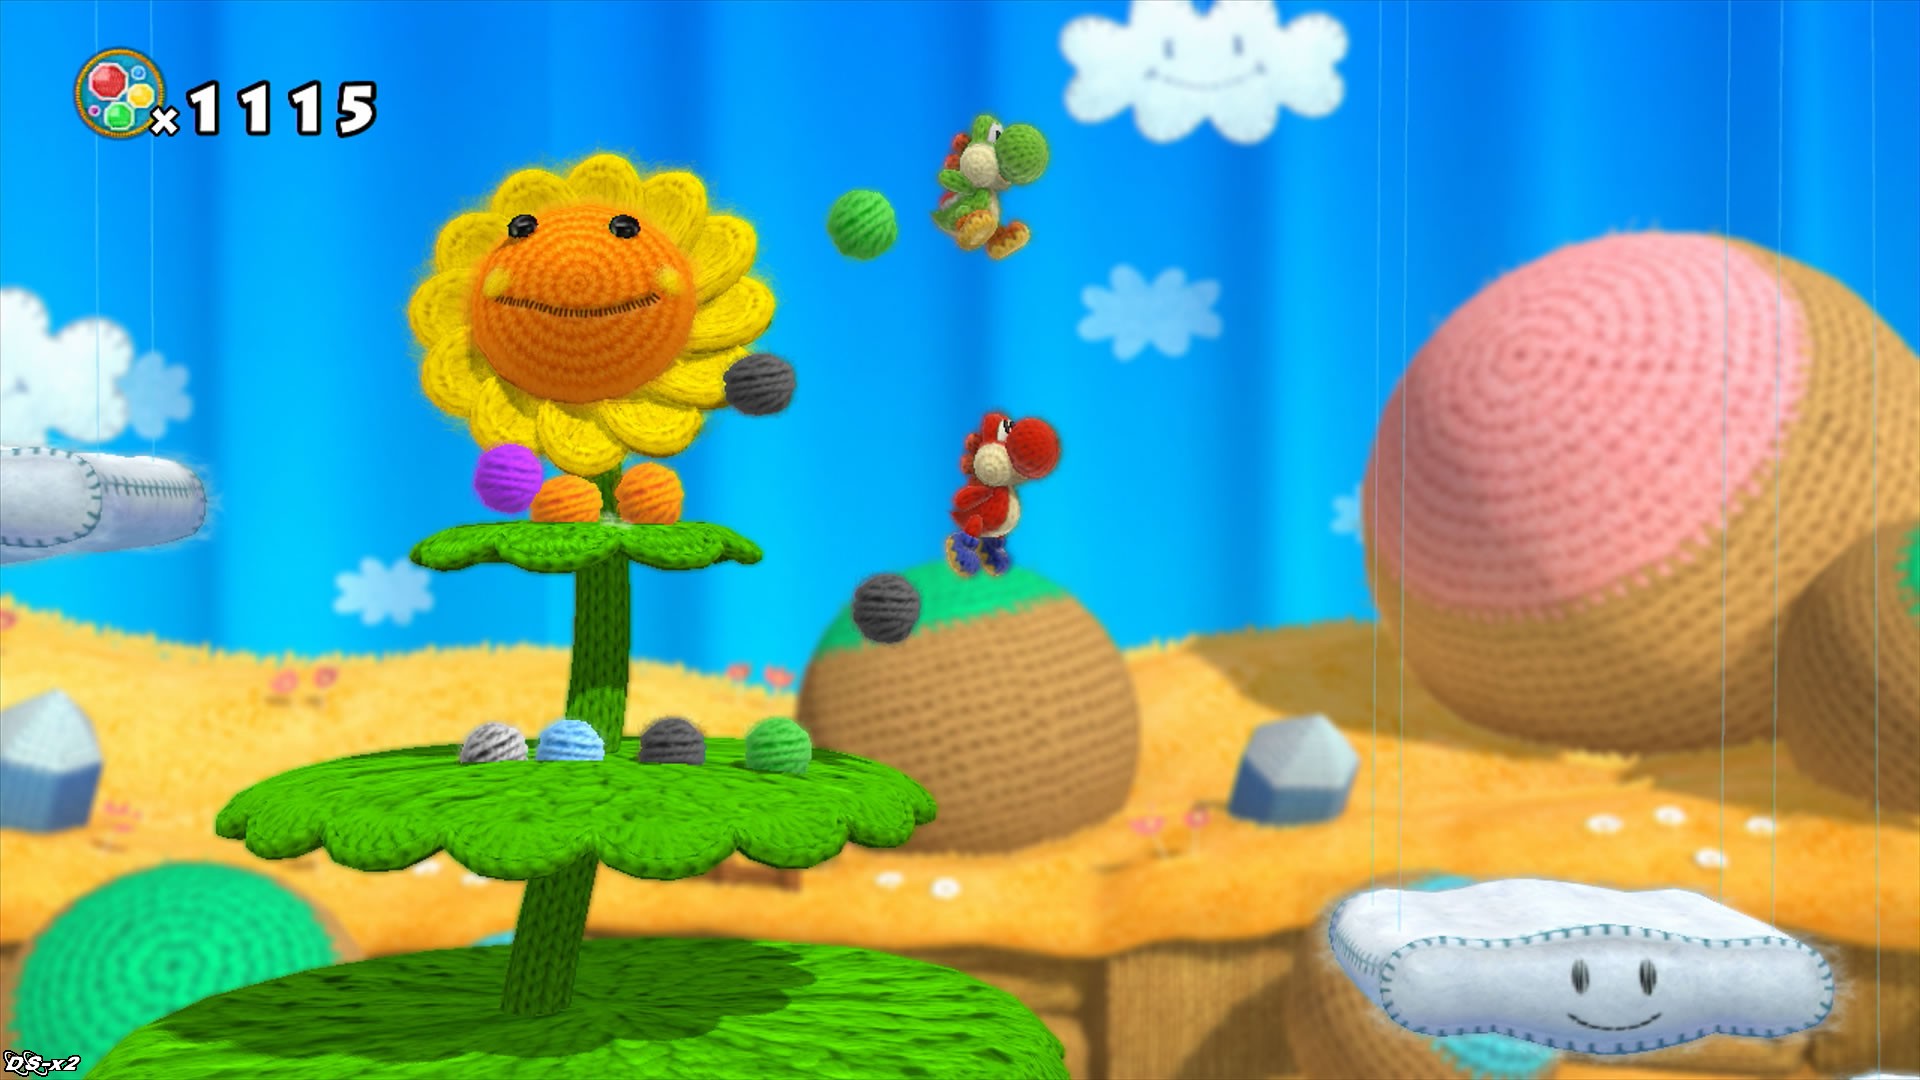 Screenshots of Yoshi's Woolly World for Wii U